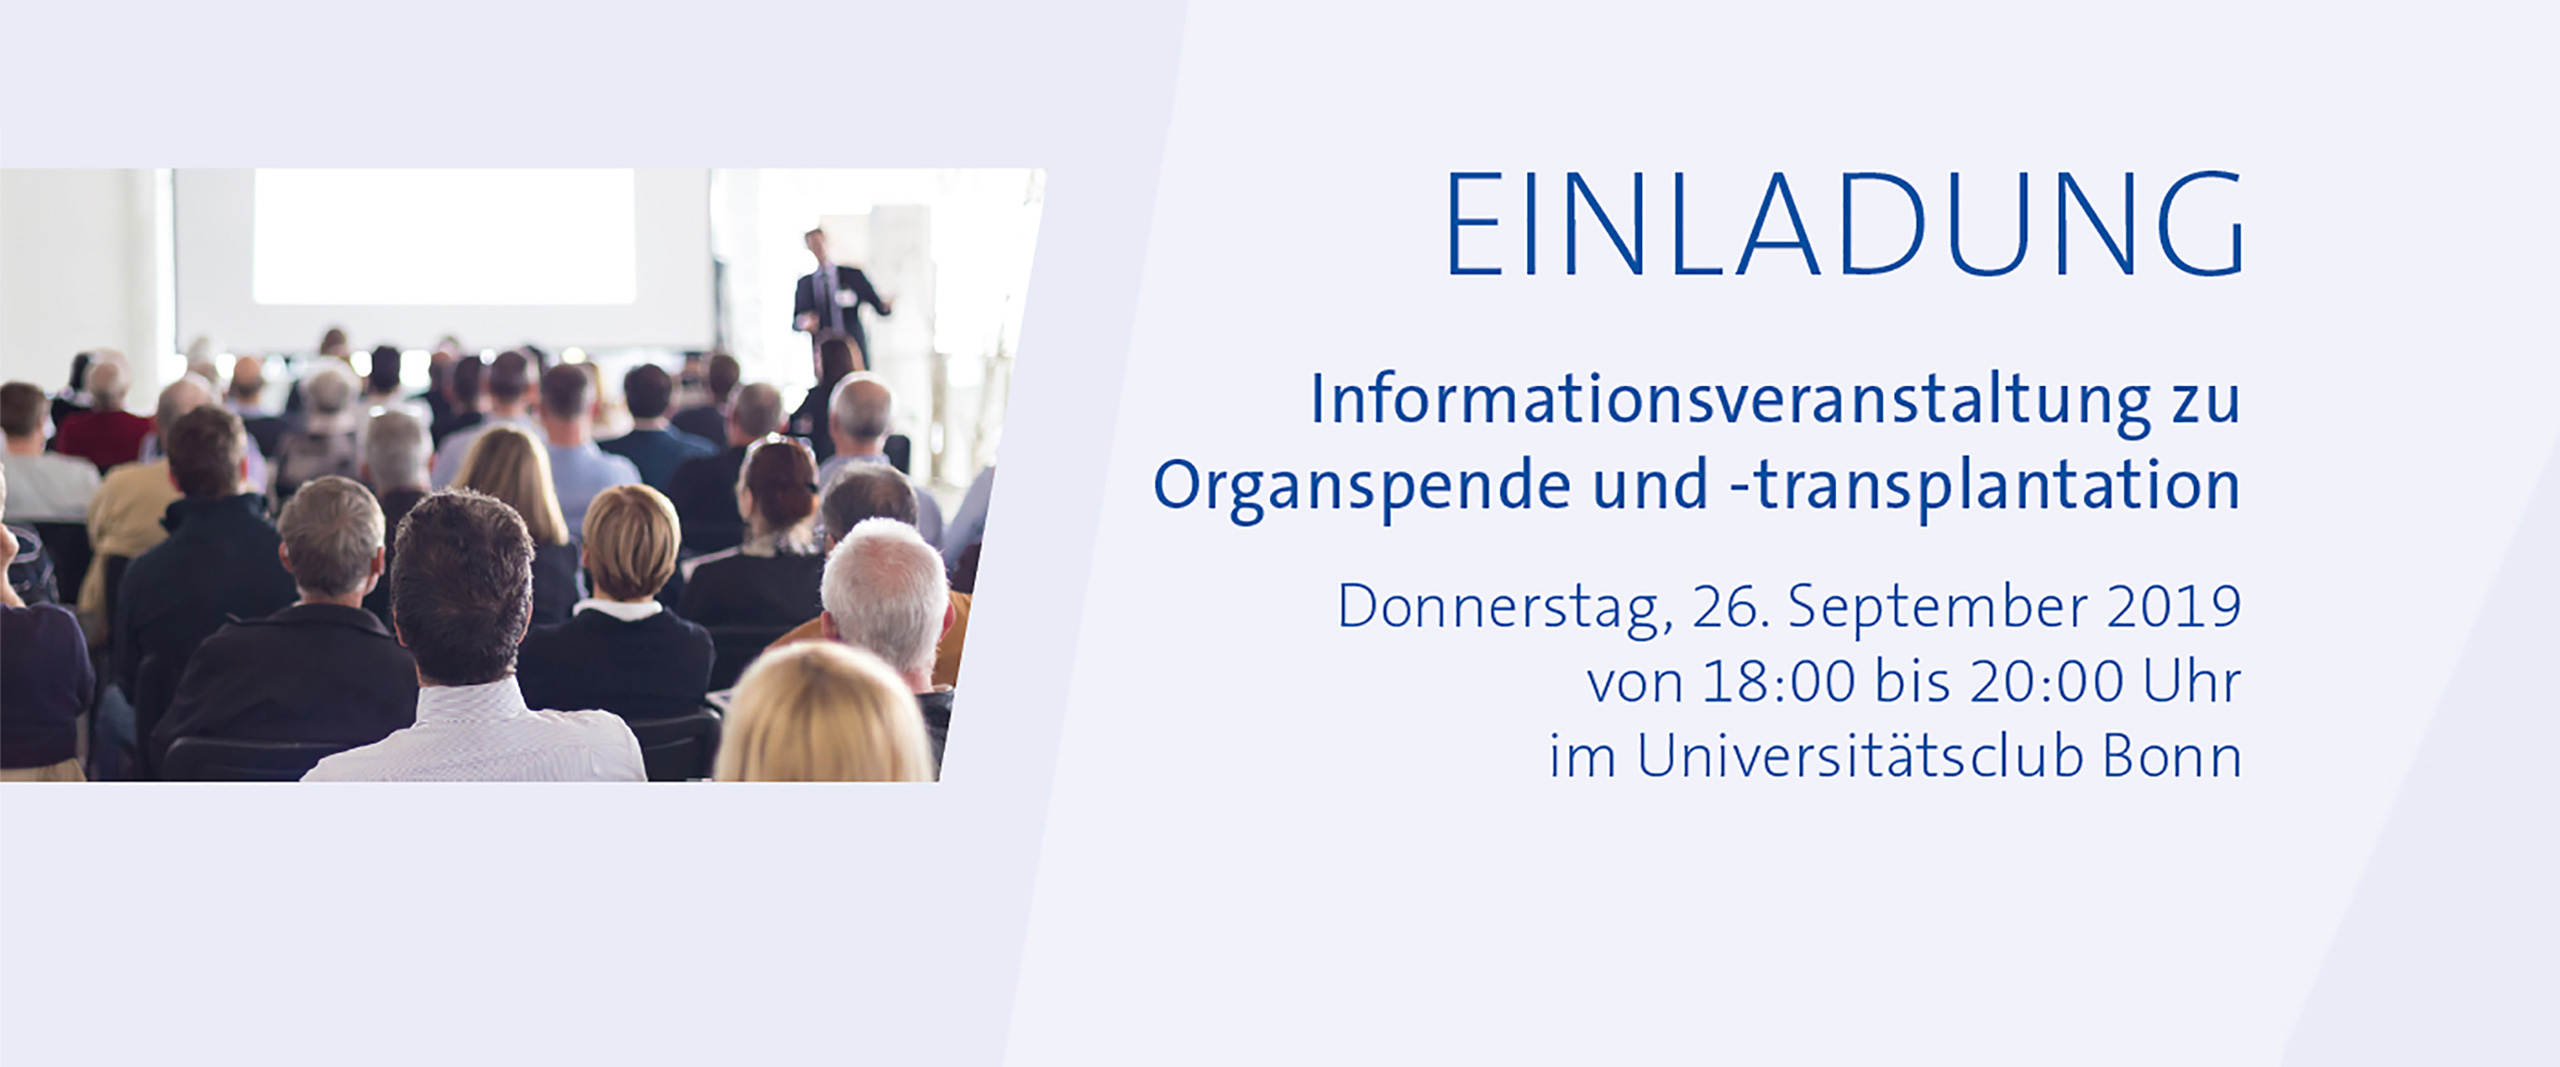 Informationsveranstaltung des Universitätsklinikums Bonn rund um Organspende und -transplantation